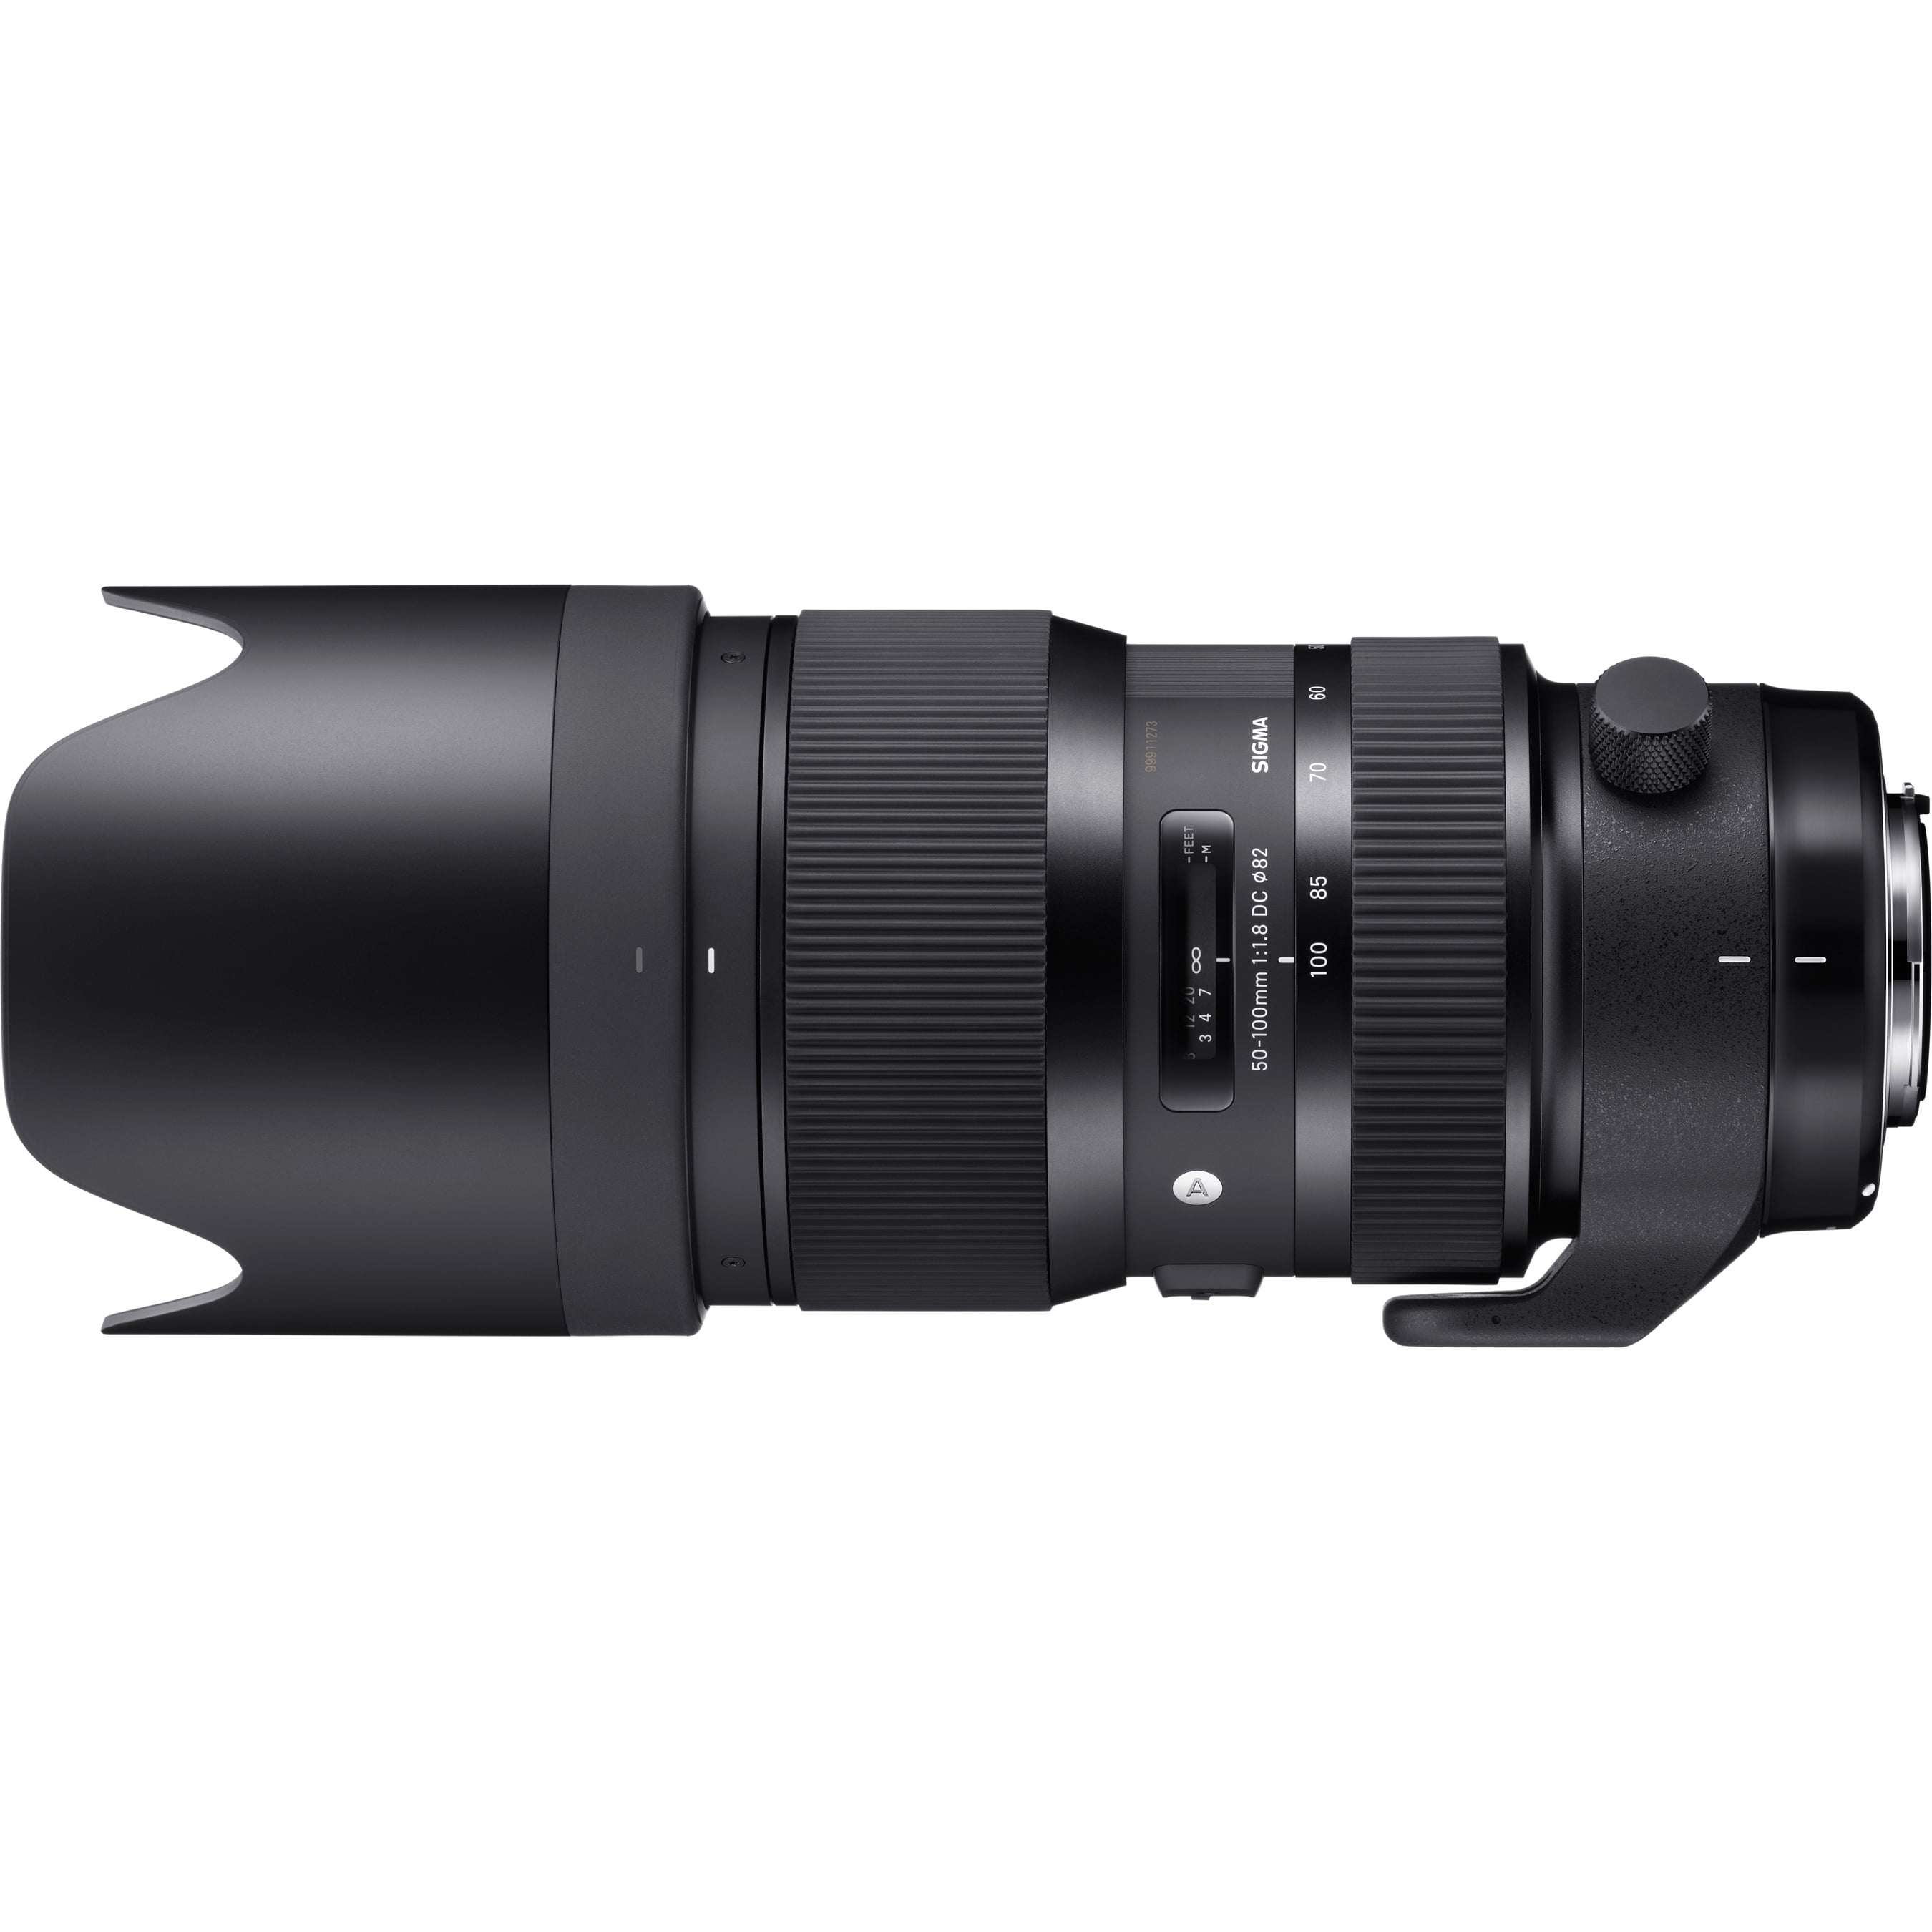 Sigma 50-100mm f/1.8 Art DC HSM Zoom Lens (for Nikon Cameras)